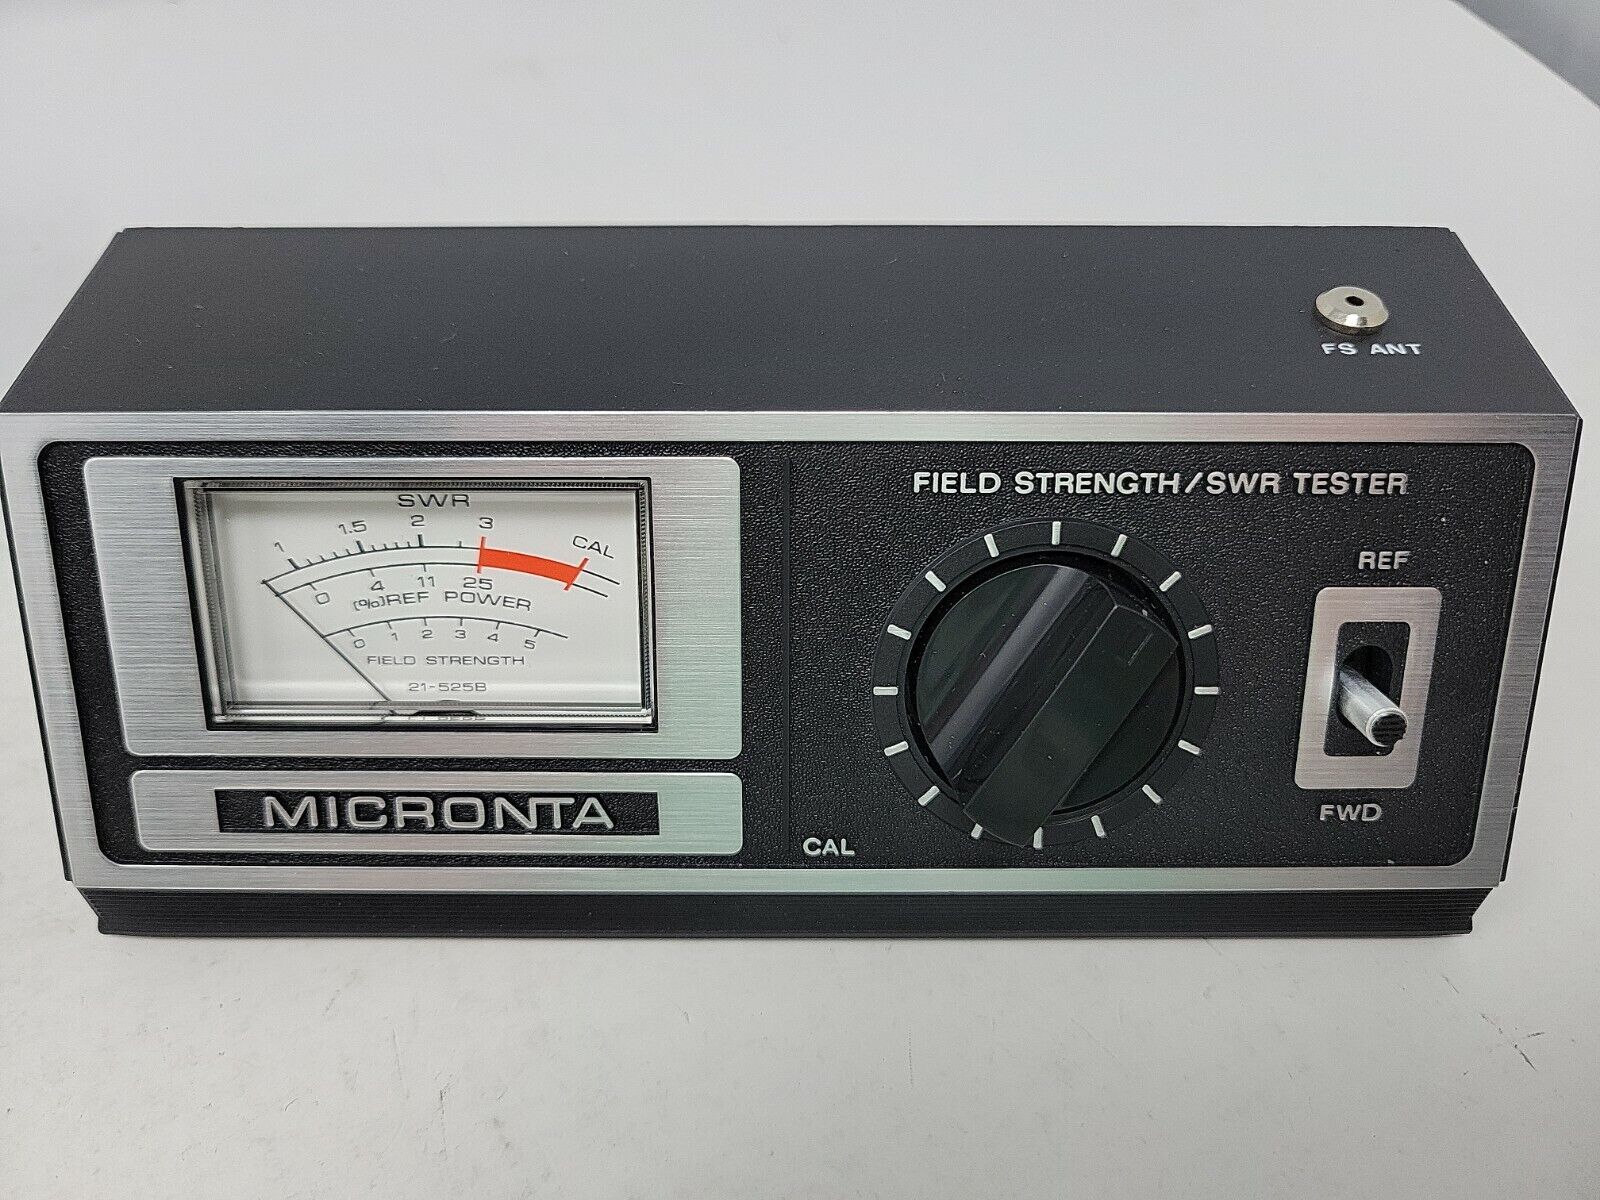 Luxury goods Micronta Field Strength and High quality SWR Model Tester Shack Radio 21-525B